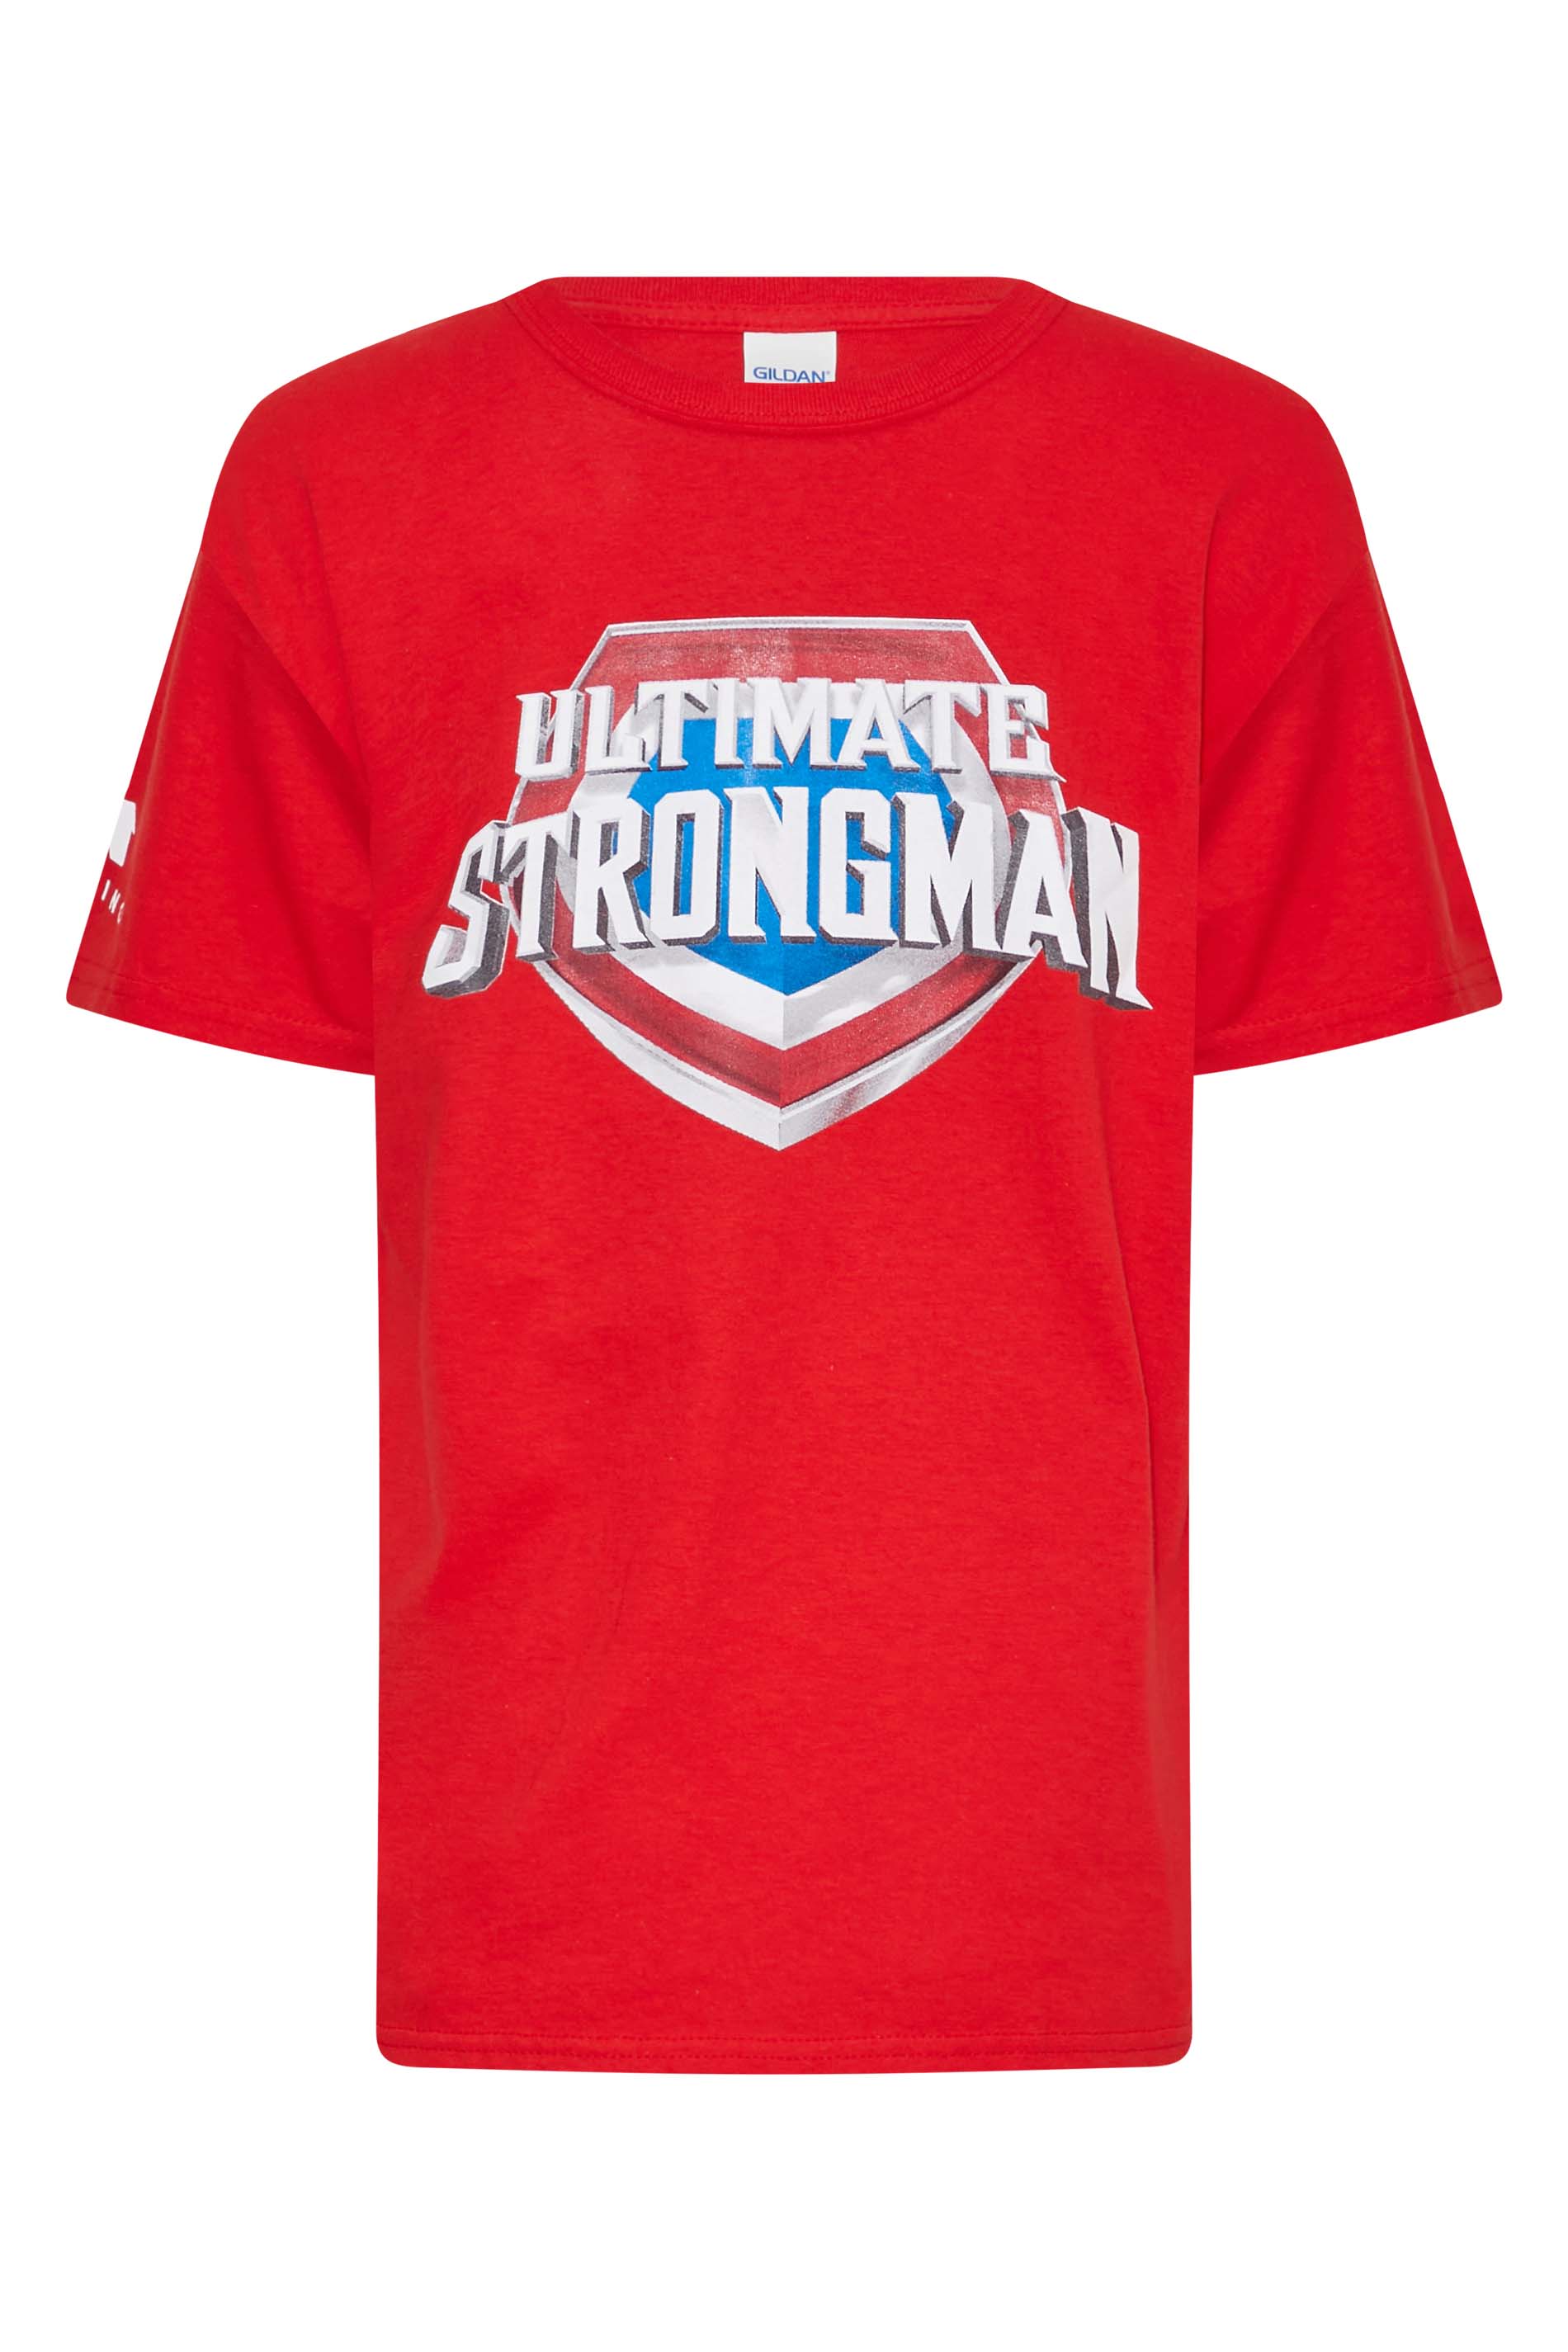 BadRhino Boys Red Ultimate Strongman T-Shirt | BadRhino 1